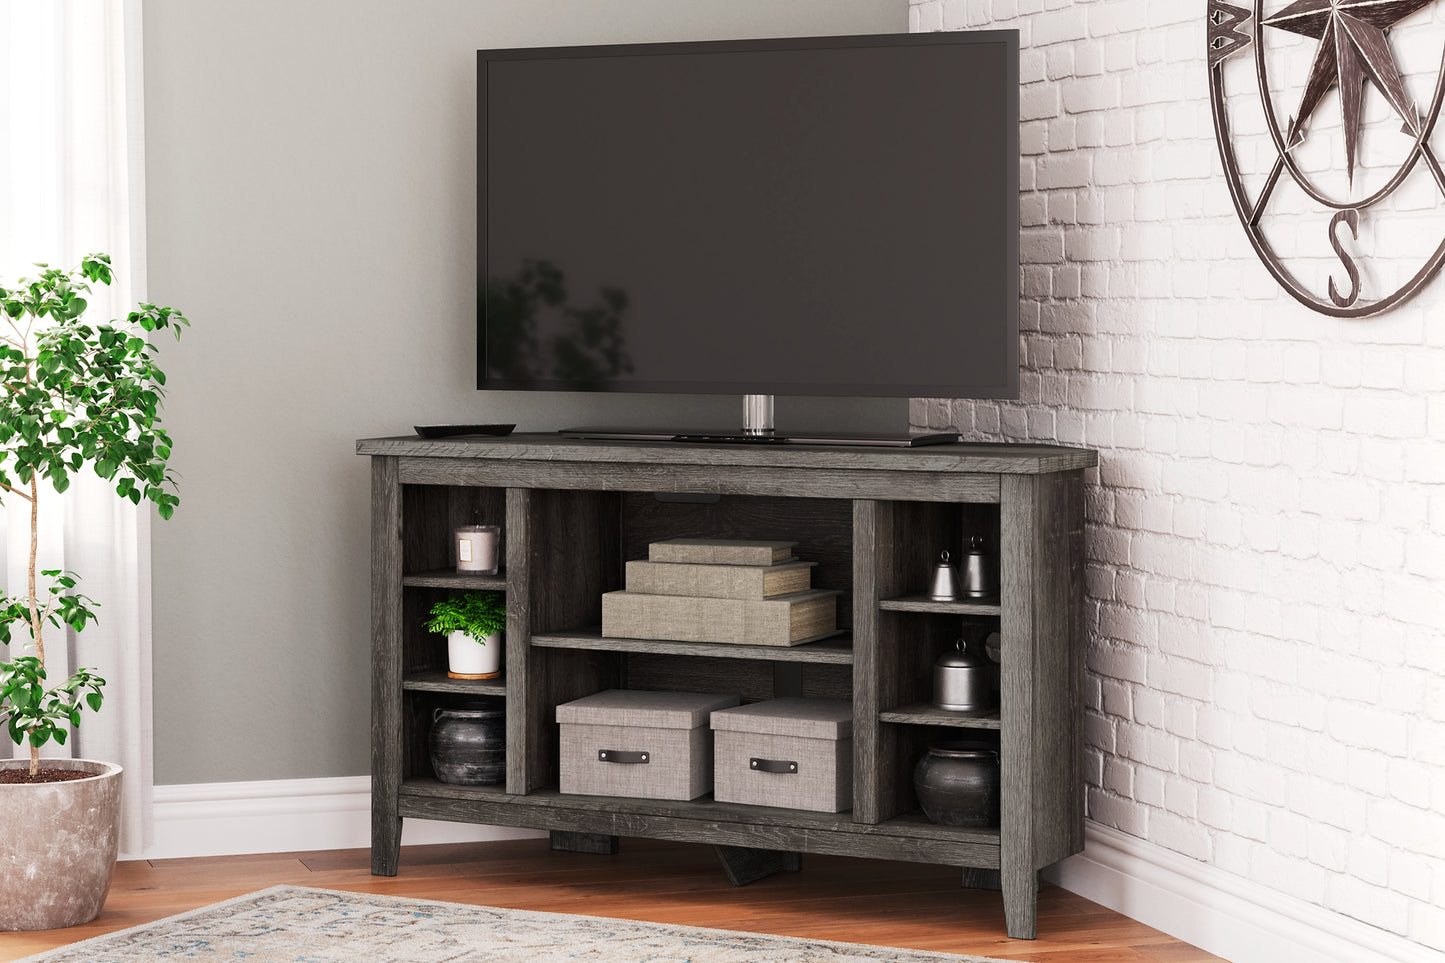 Arlenbry Corner TV Stand/Fireplace OPT JB's Furniture  Home Furniture, Home Decor, Furniture Store